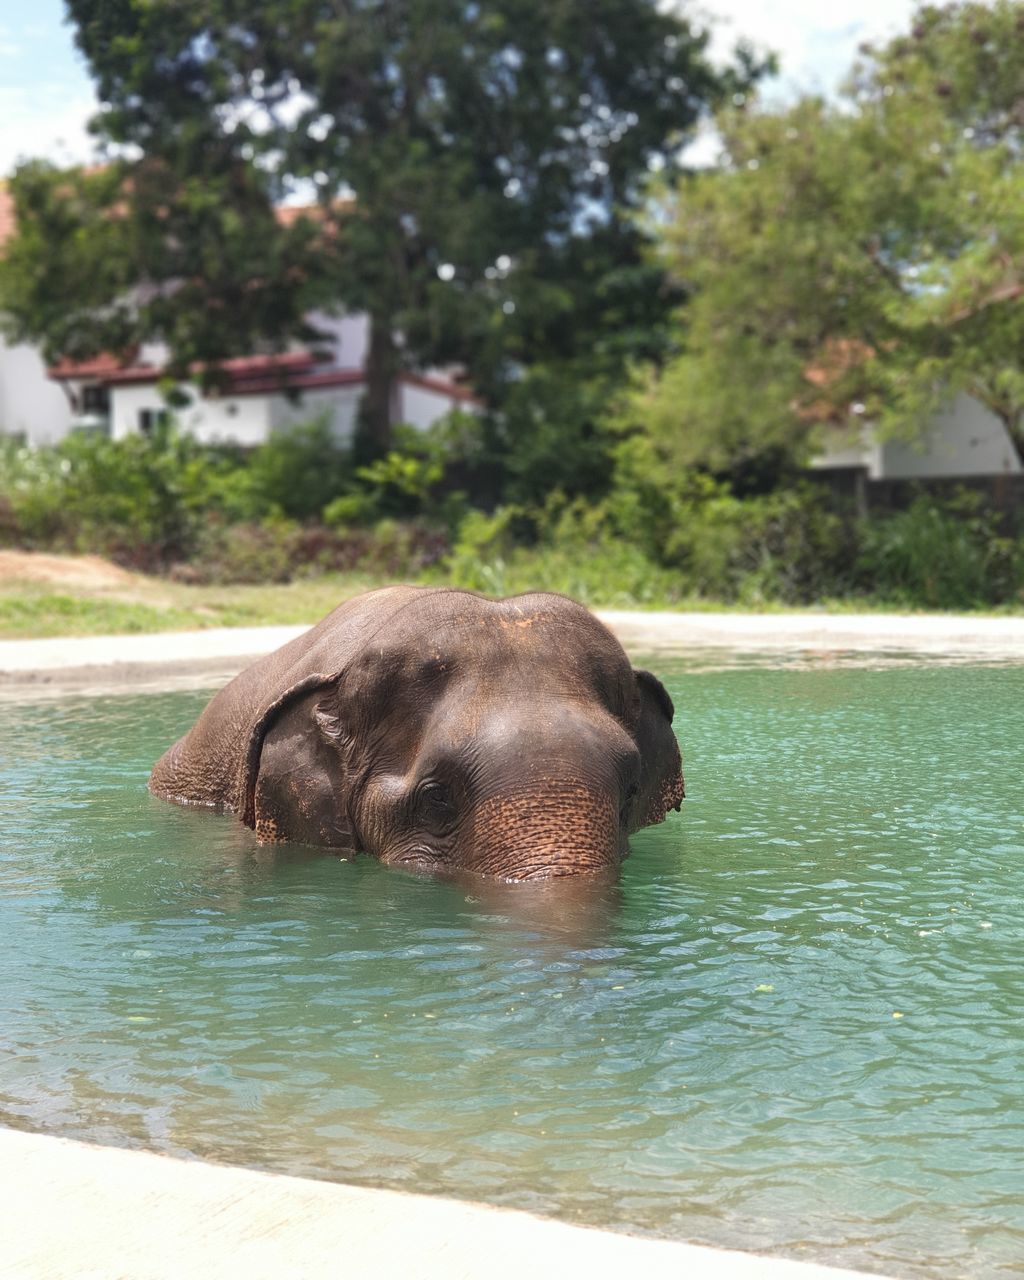 ELEPHANT IN A LAKE